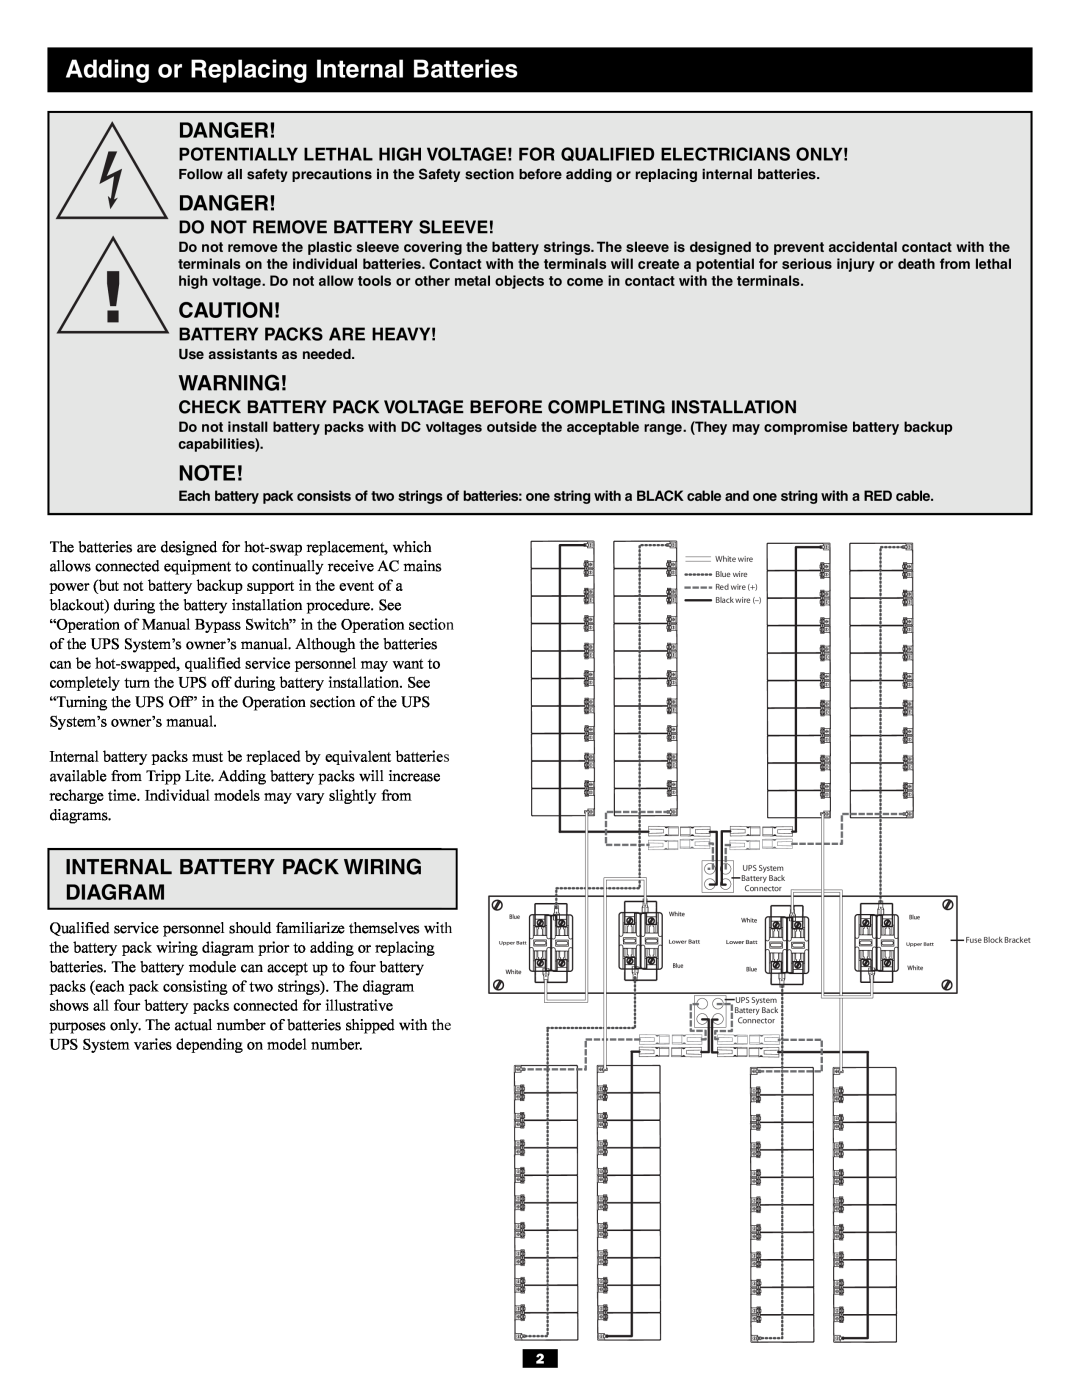 Tripp Lite SURBC2030 owner manual Adding or Replacing Internal Batteries, Danger, Internal Battery Pack Wiring Diagram 